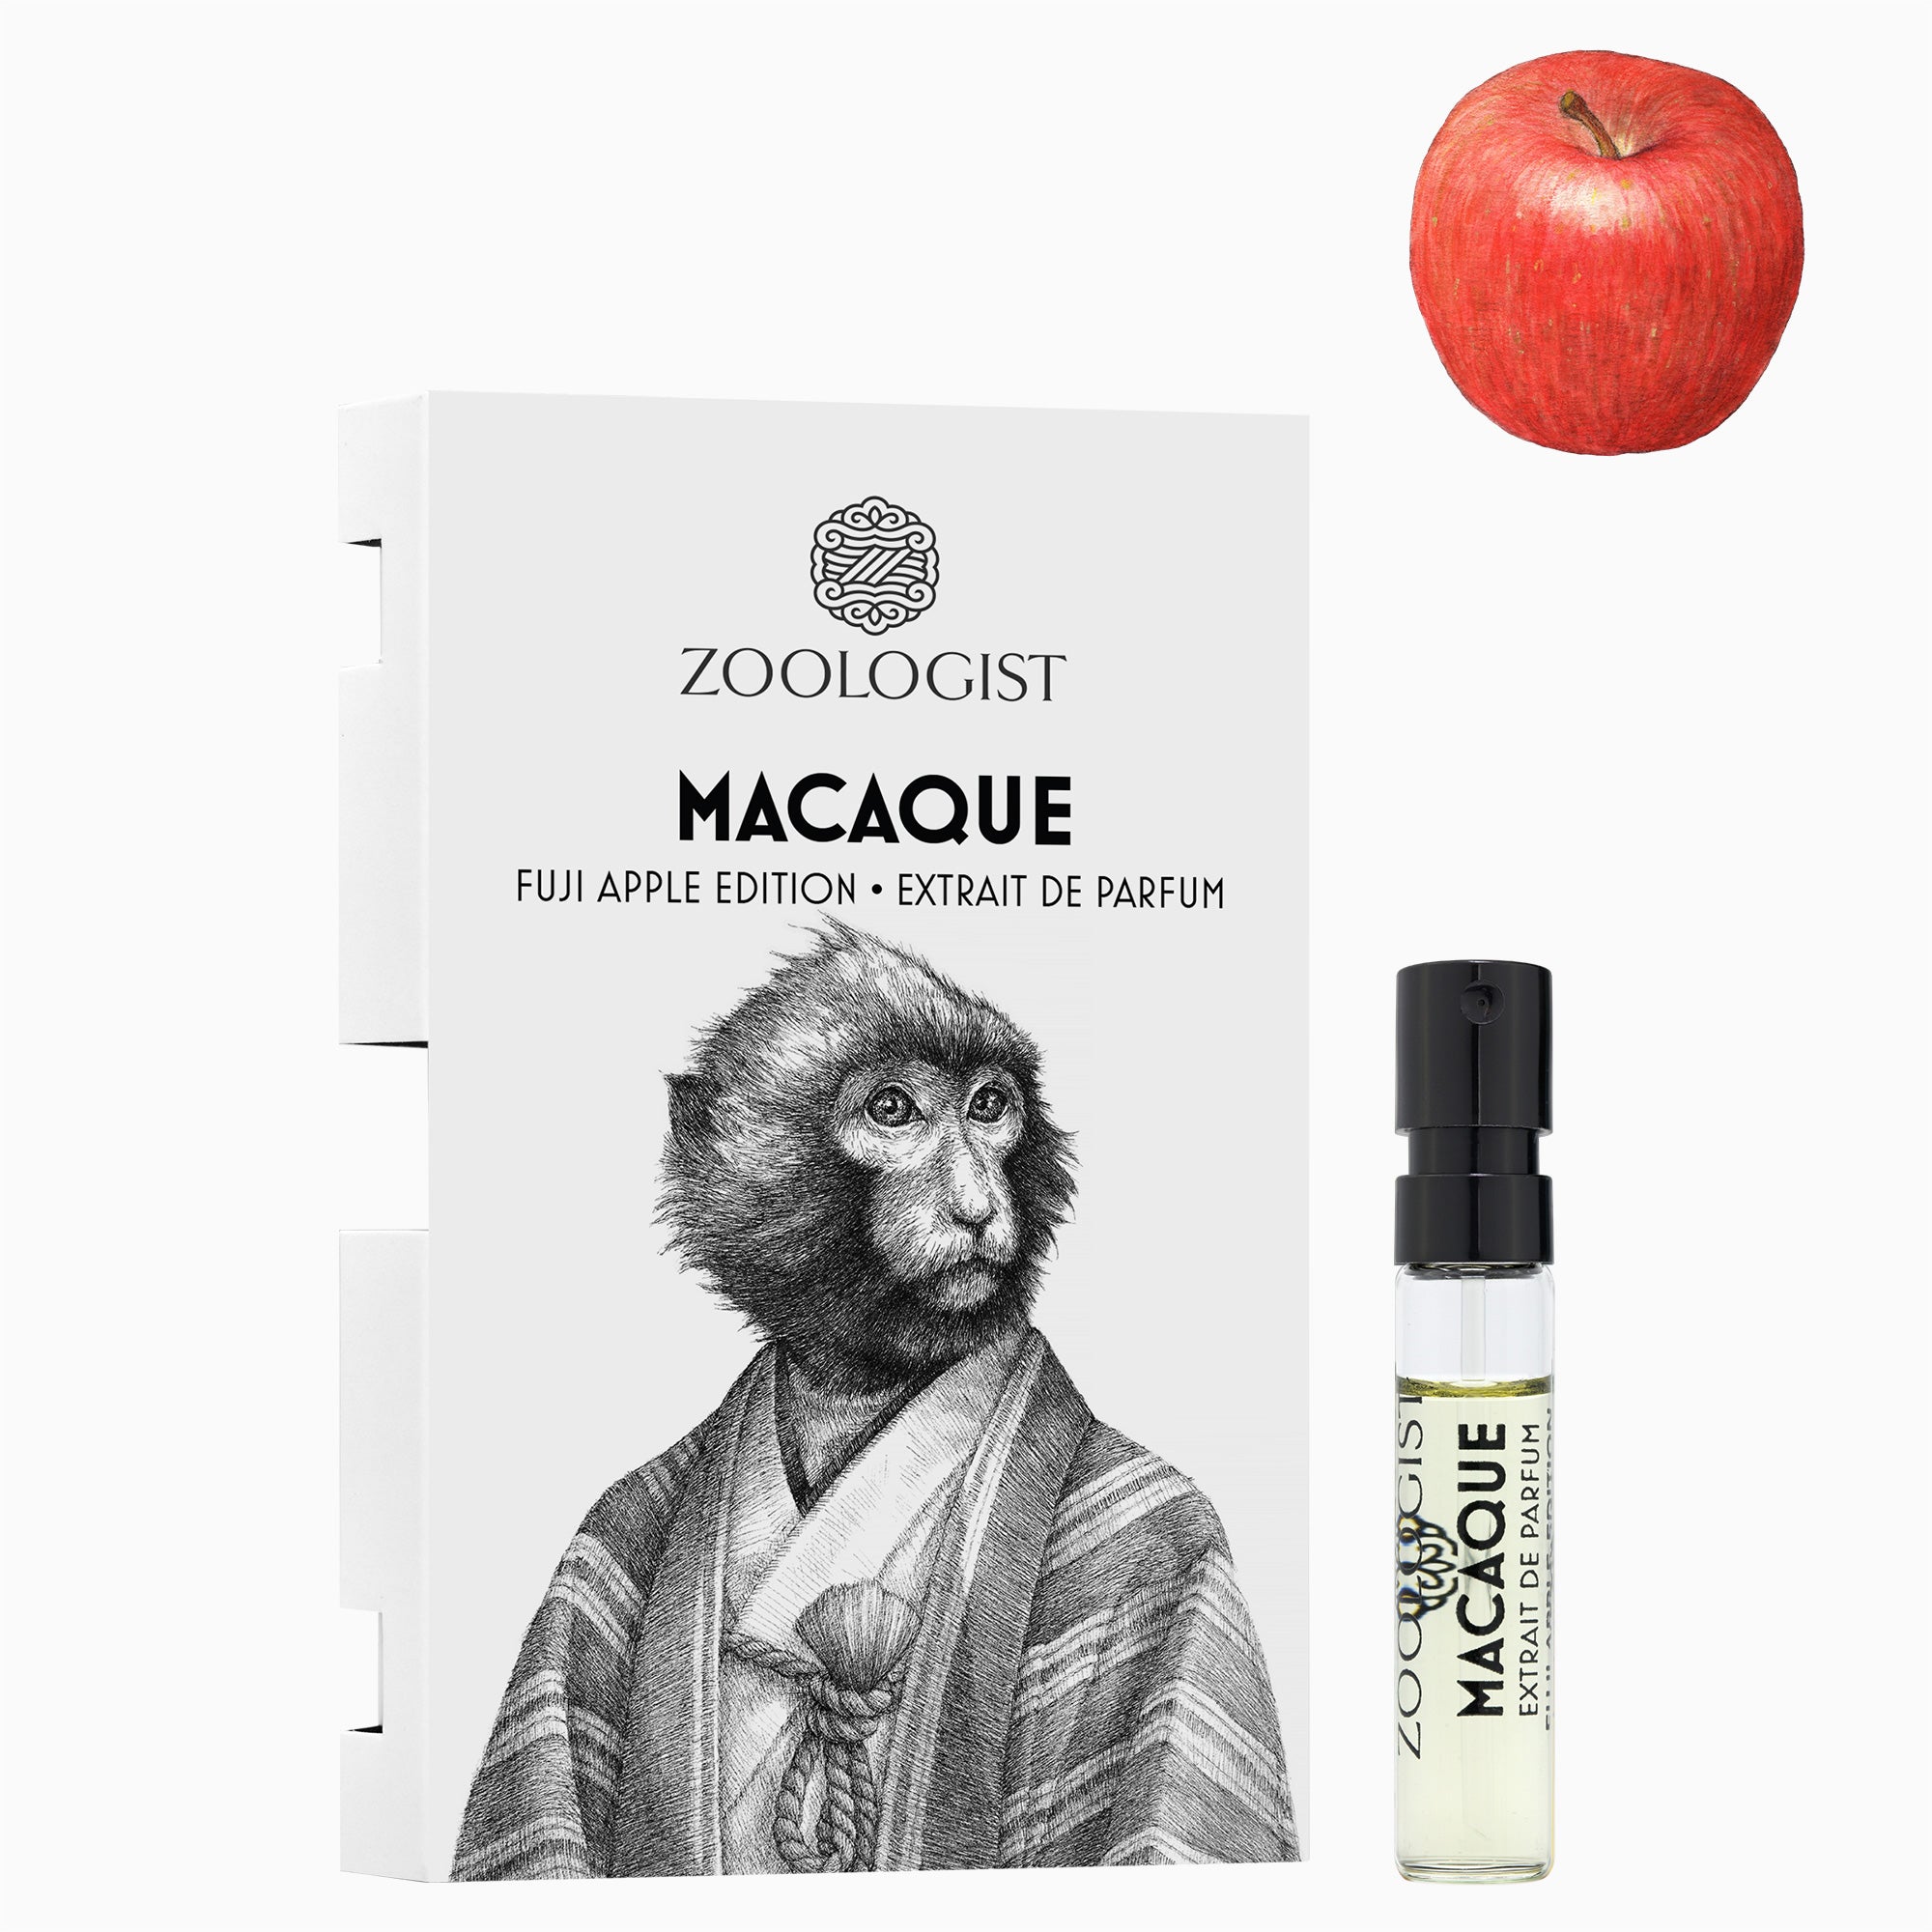 Zoologist Macaque Fuji Apple Edition Sample